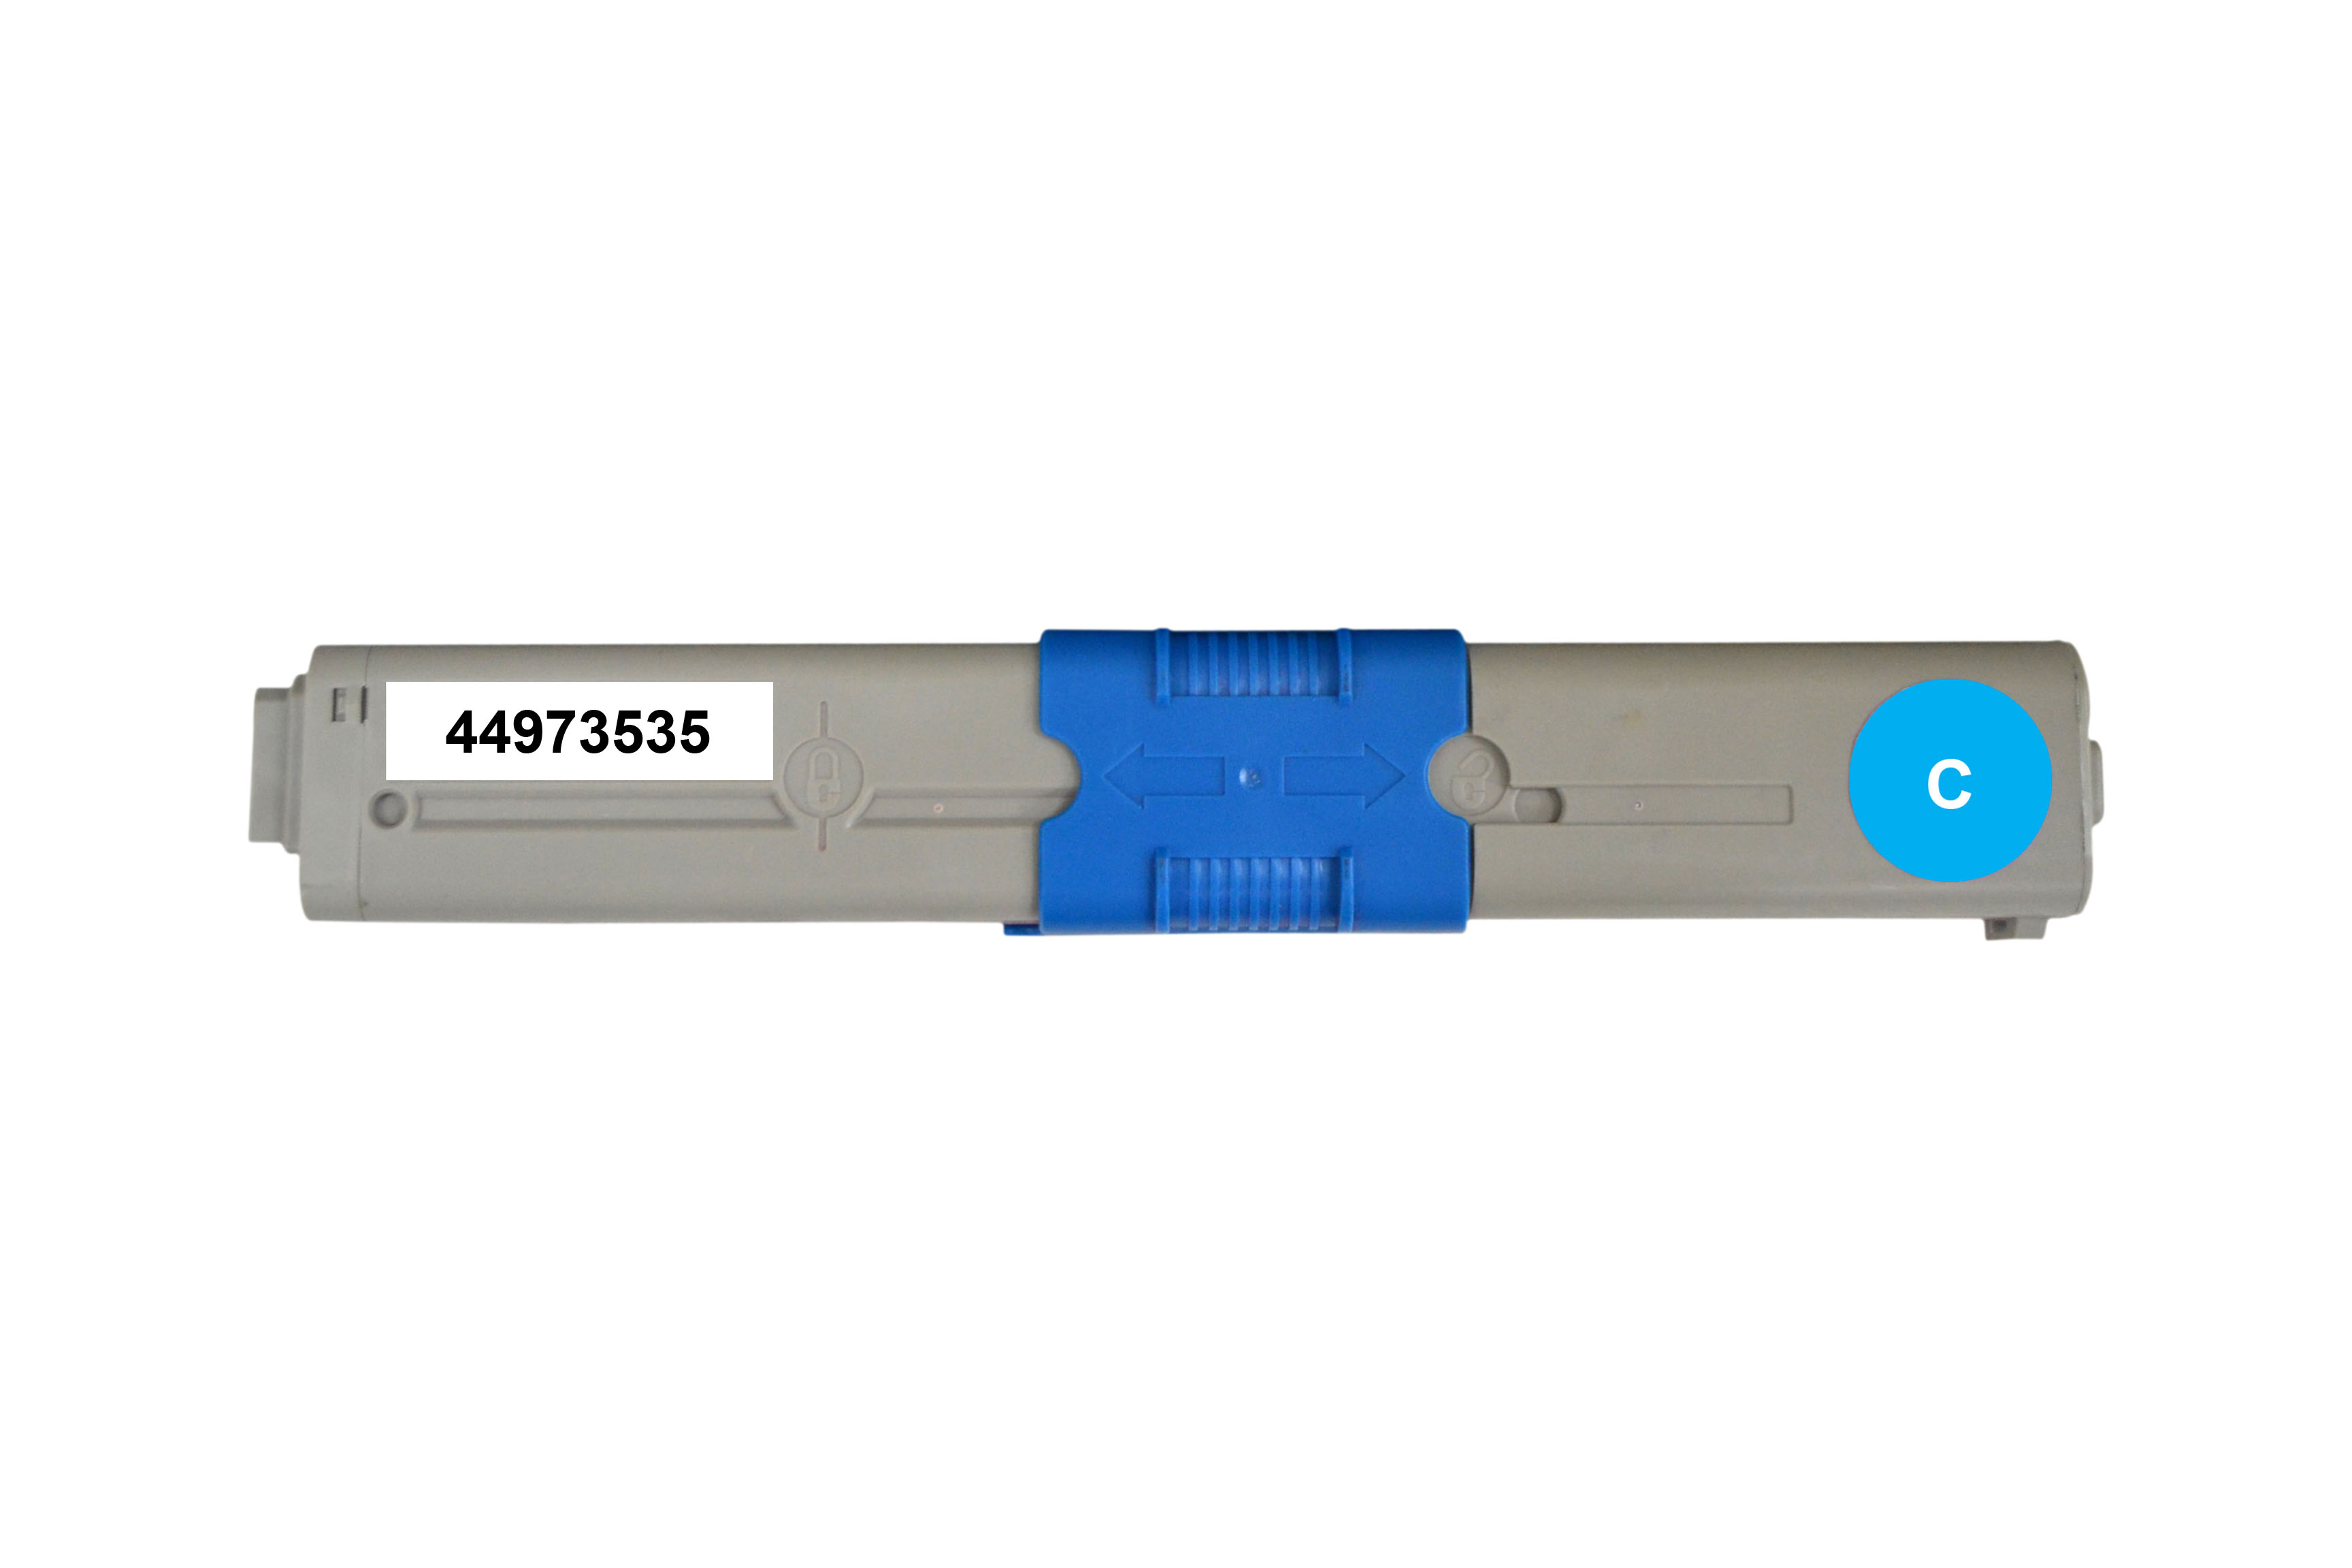 NewbuiltO301C, Newbuilt Toner kompatibel zu OKI C301 cyan (1.500 S.)